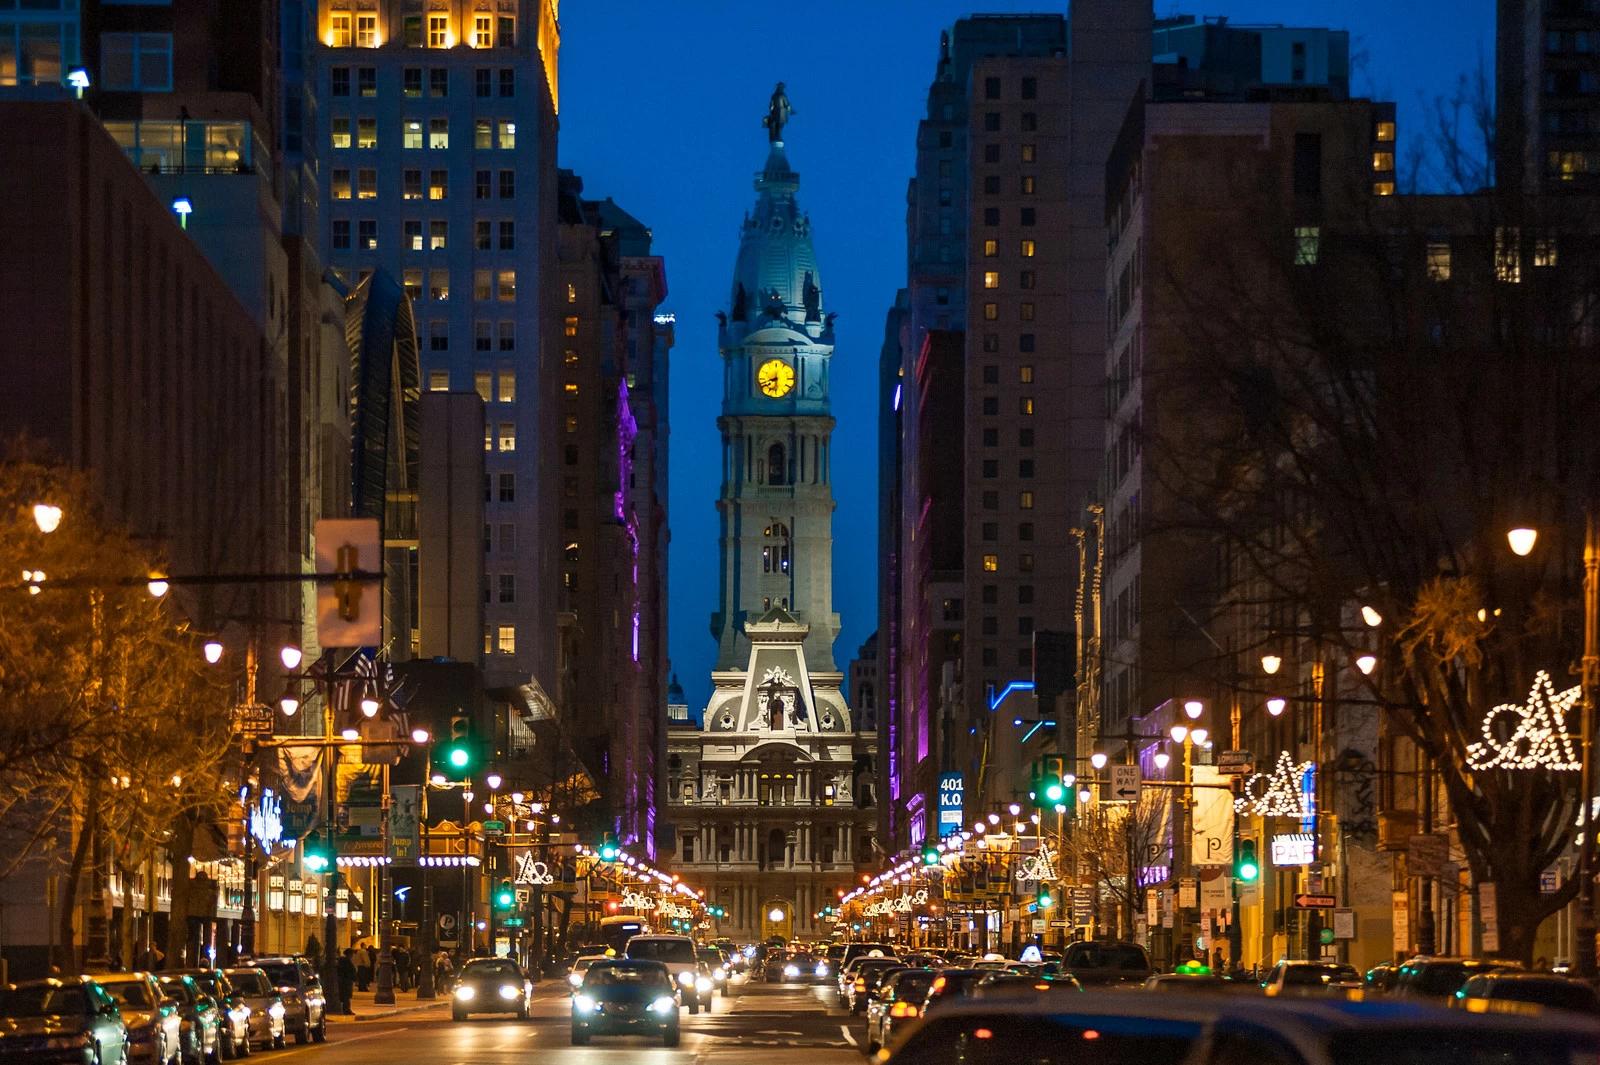 Broad Street at night, Philadelphia, Pennsylvania, USA. Photo and story by John Greim.